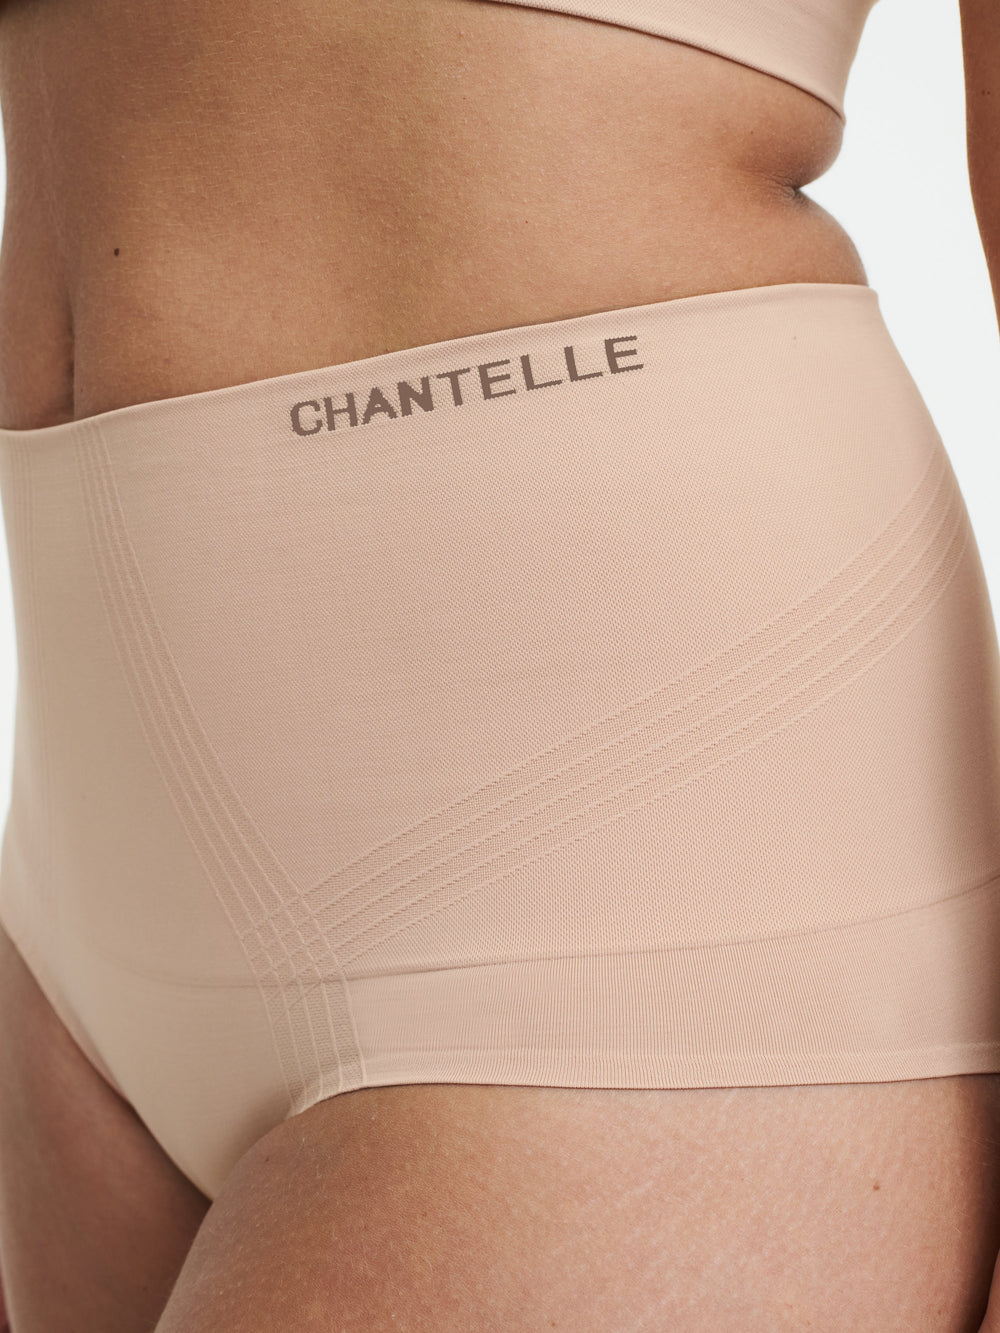 Chantelle 光滑舒适塑形高腰全套三角裤 - Sirocco 全套三角裤 Chantelle